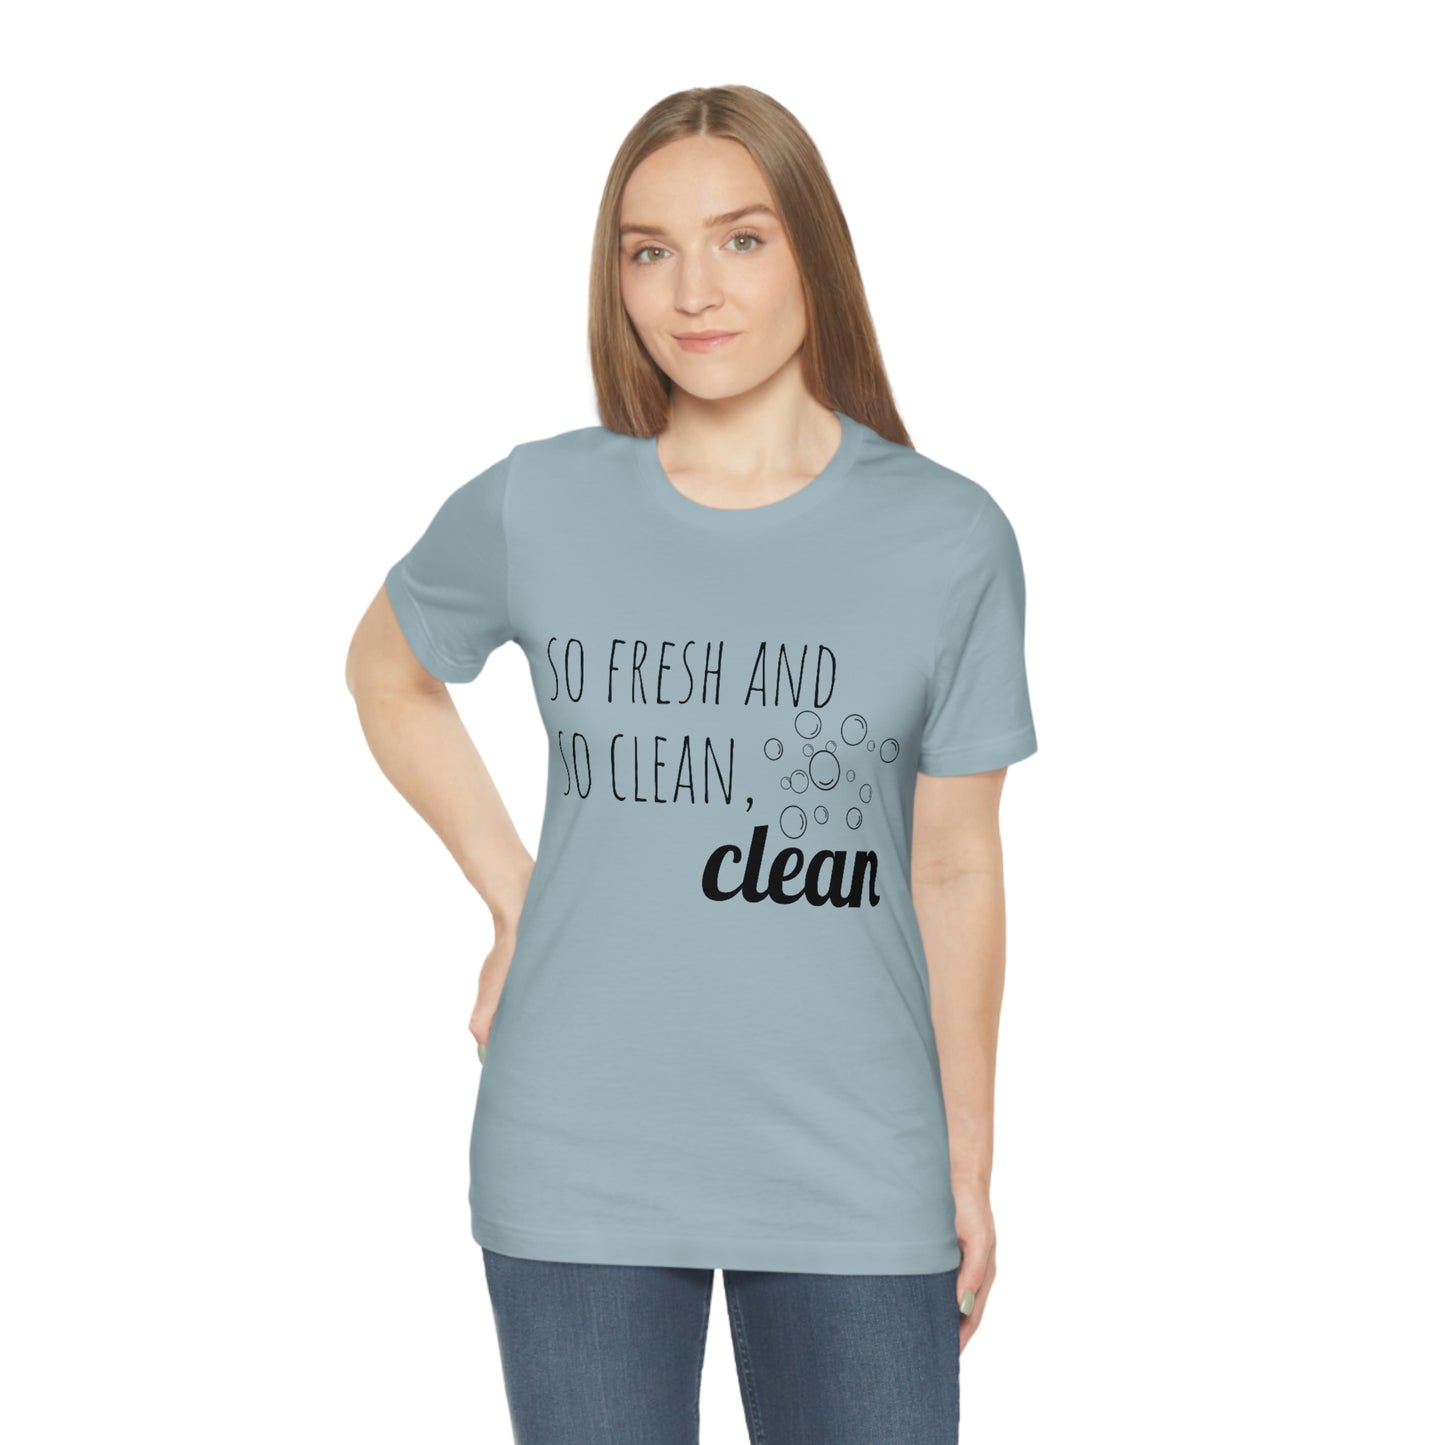 So fresh and so clean - Unisex T-shirt